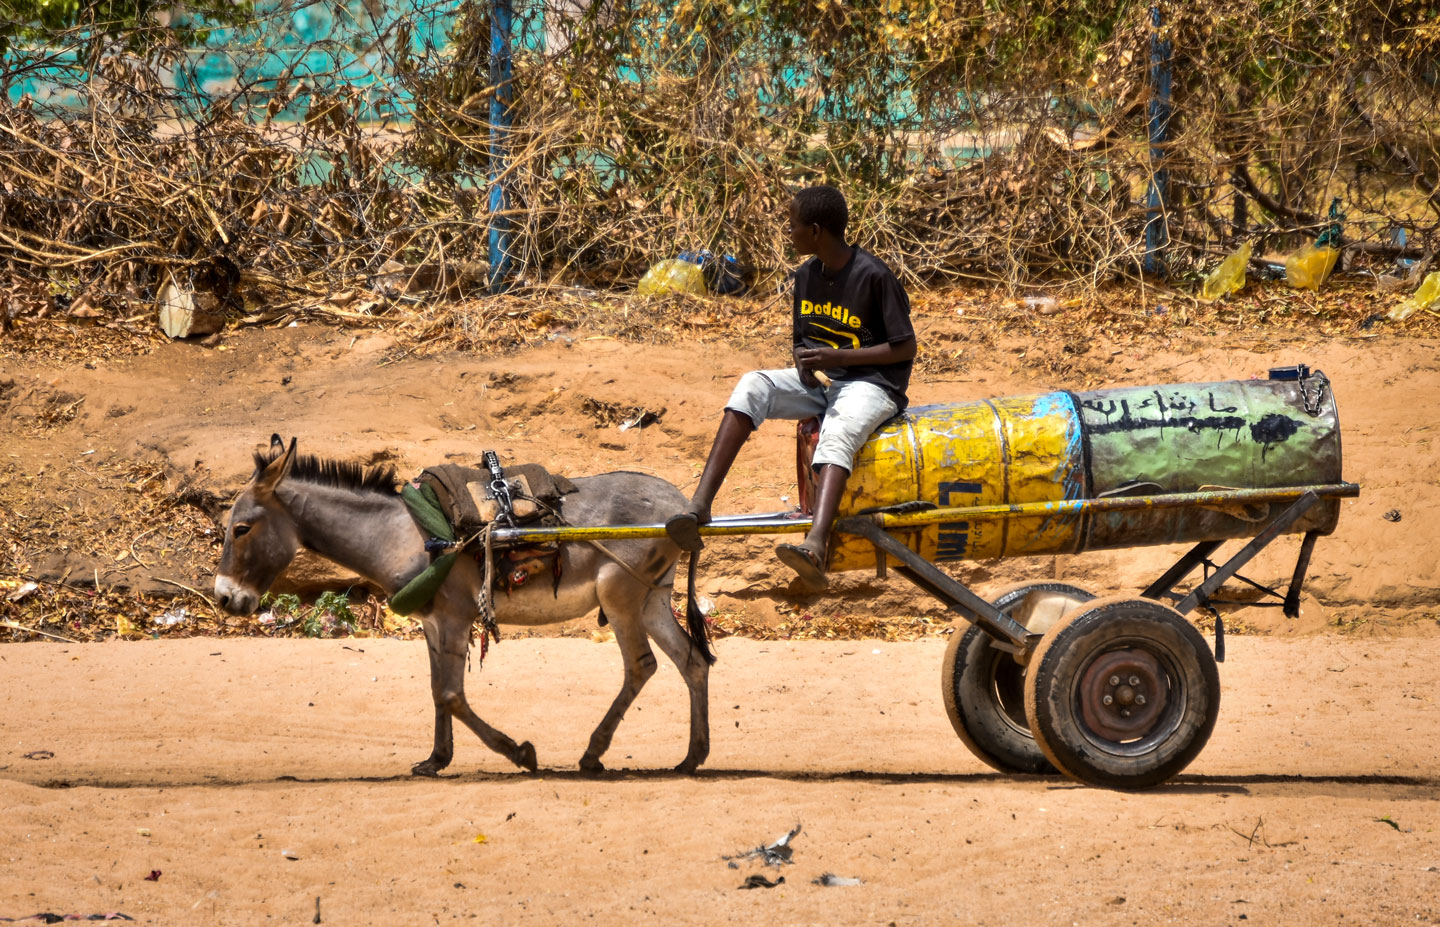 Donkey carts are ubiquitous in Sudan